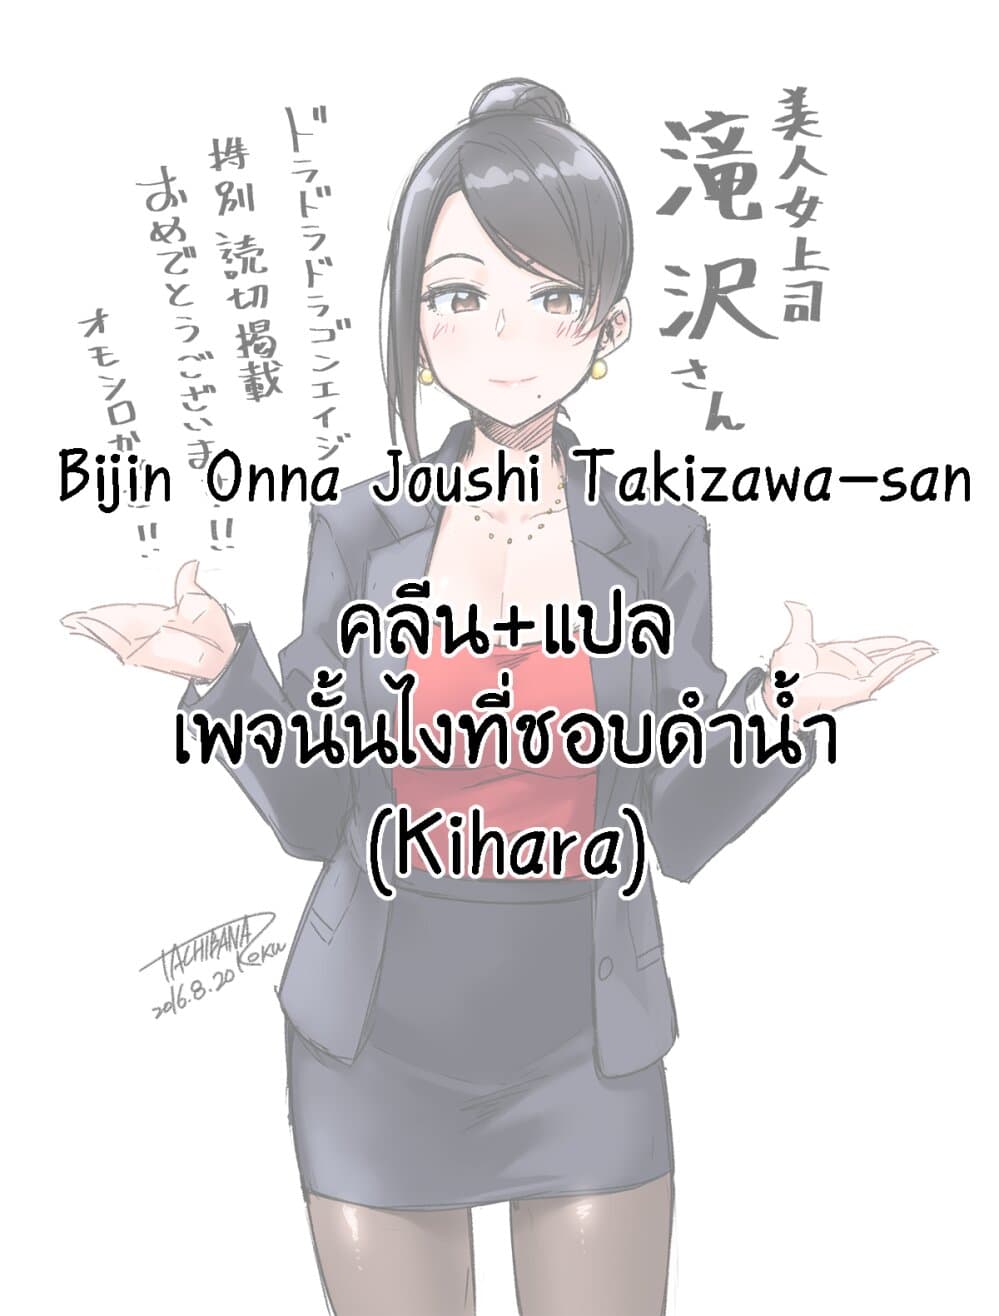 Bijin Onna Joushi Takizawa-san หัวหน้าสุดสวย ทากิซาวะซัง 19-19